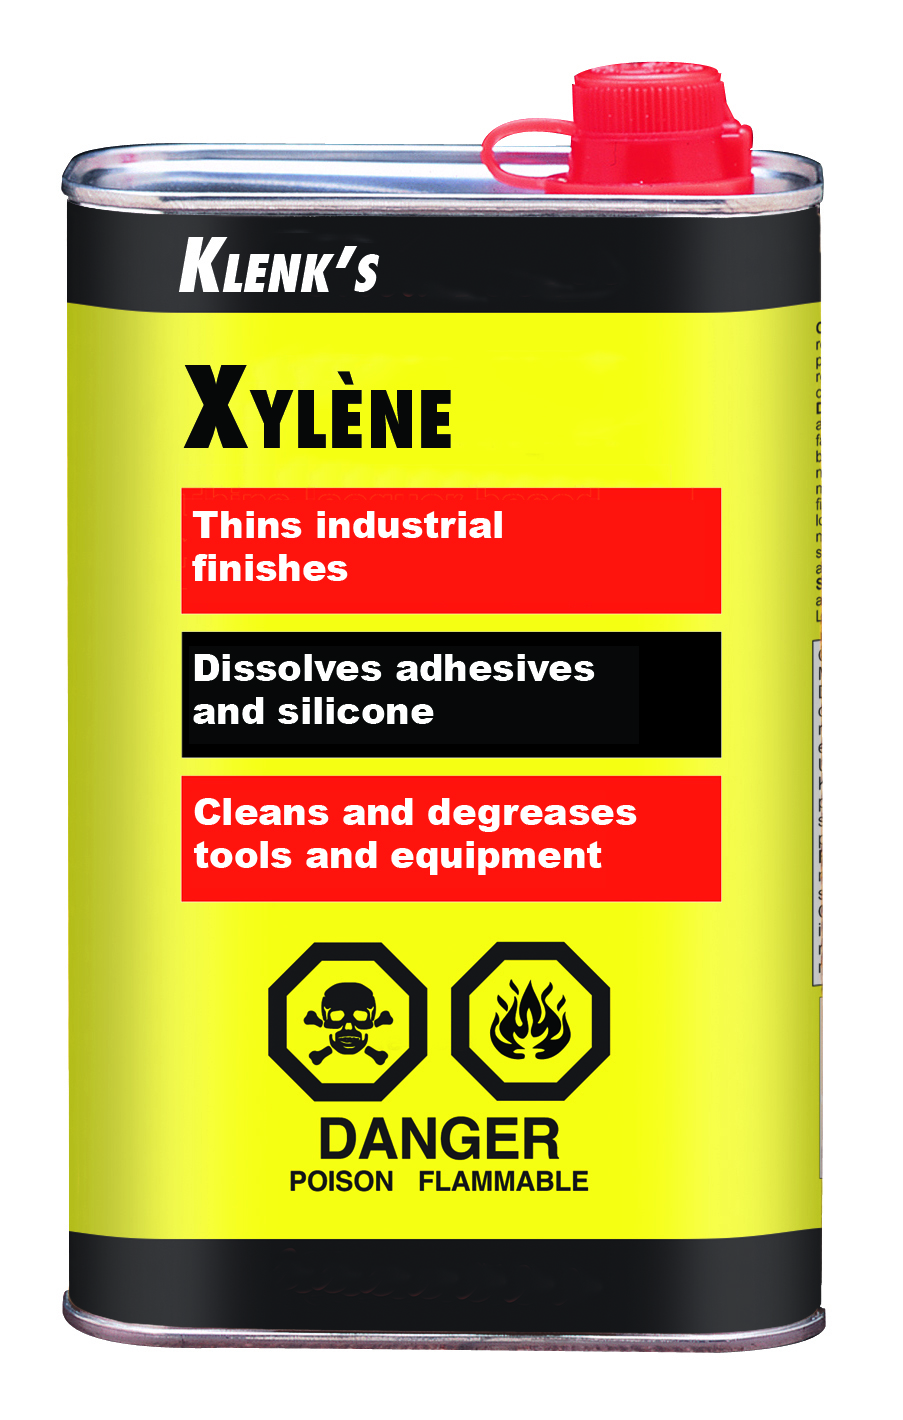 Klenk's Xylene